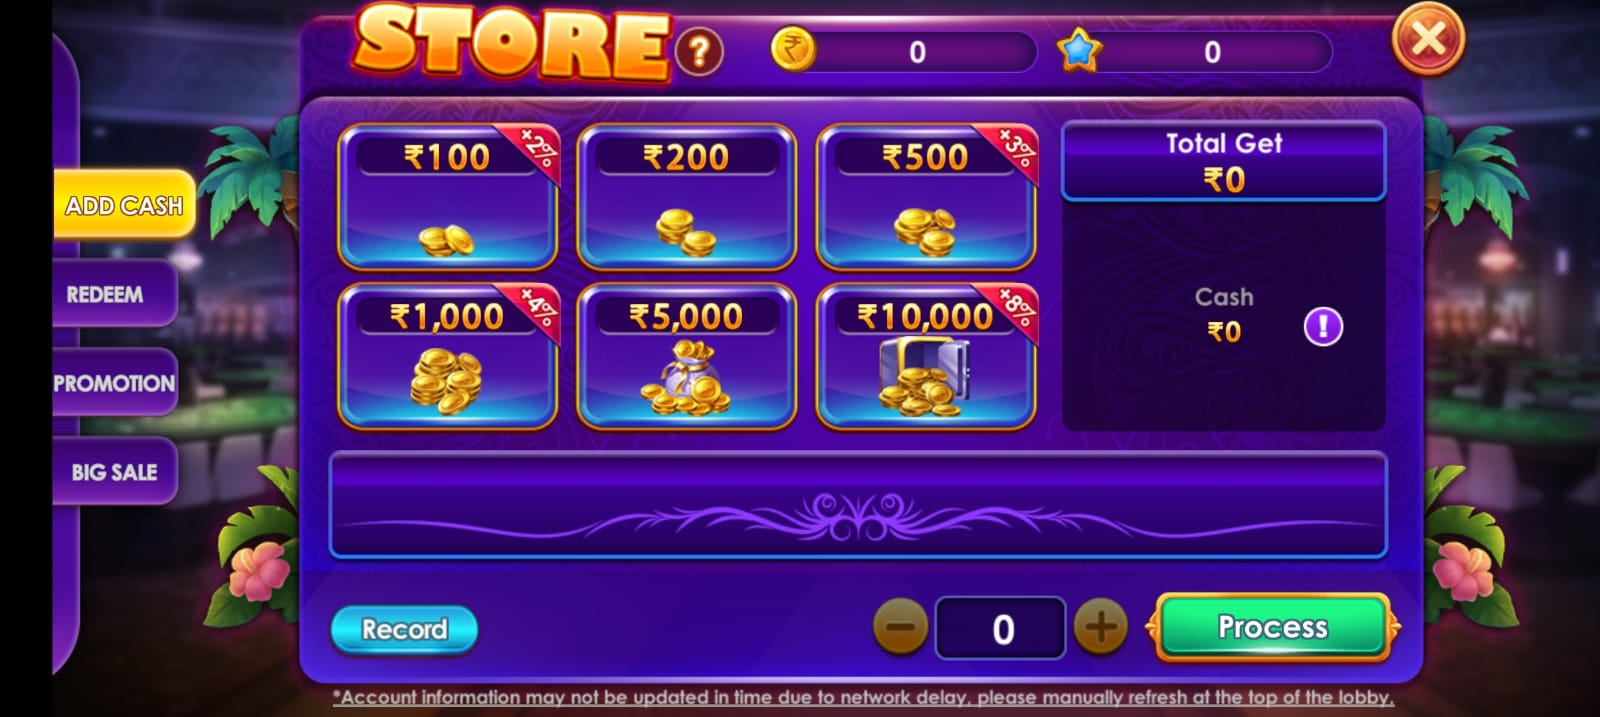 Add Money In Mega Slots Application